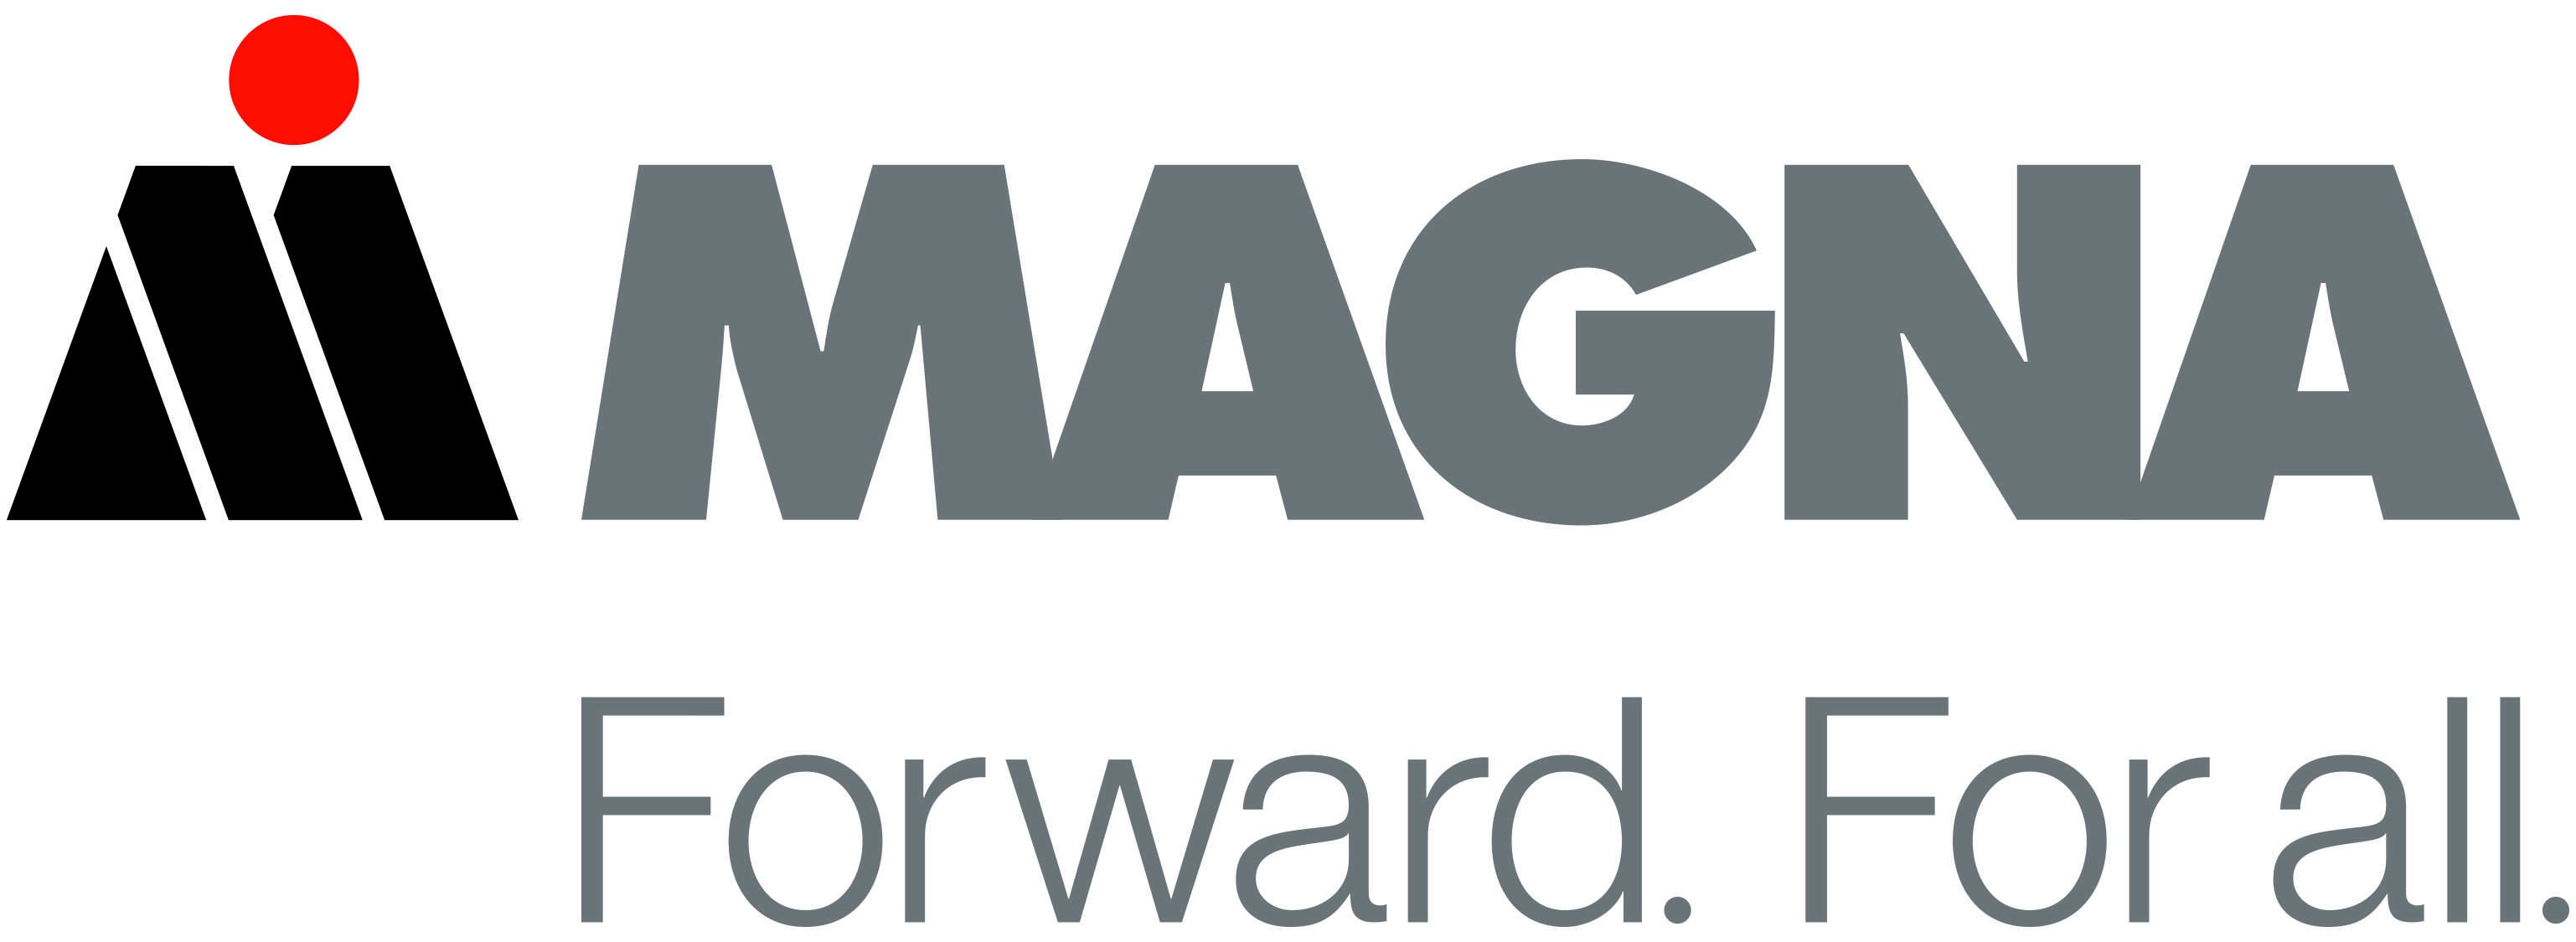 Magna International 